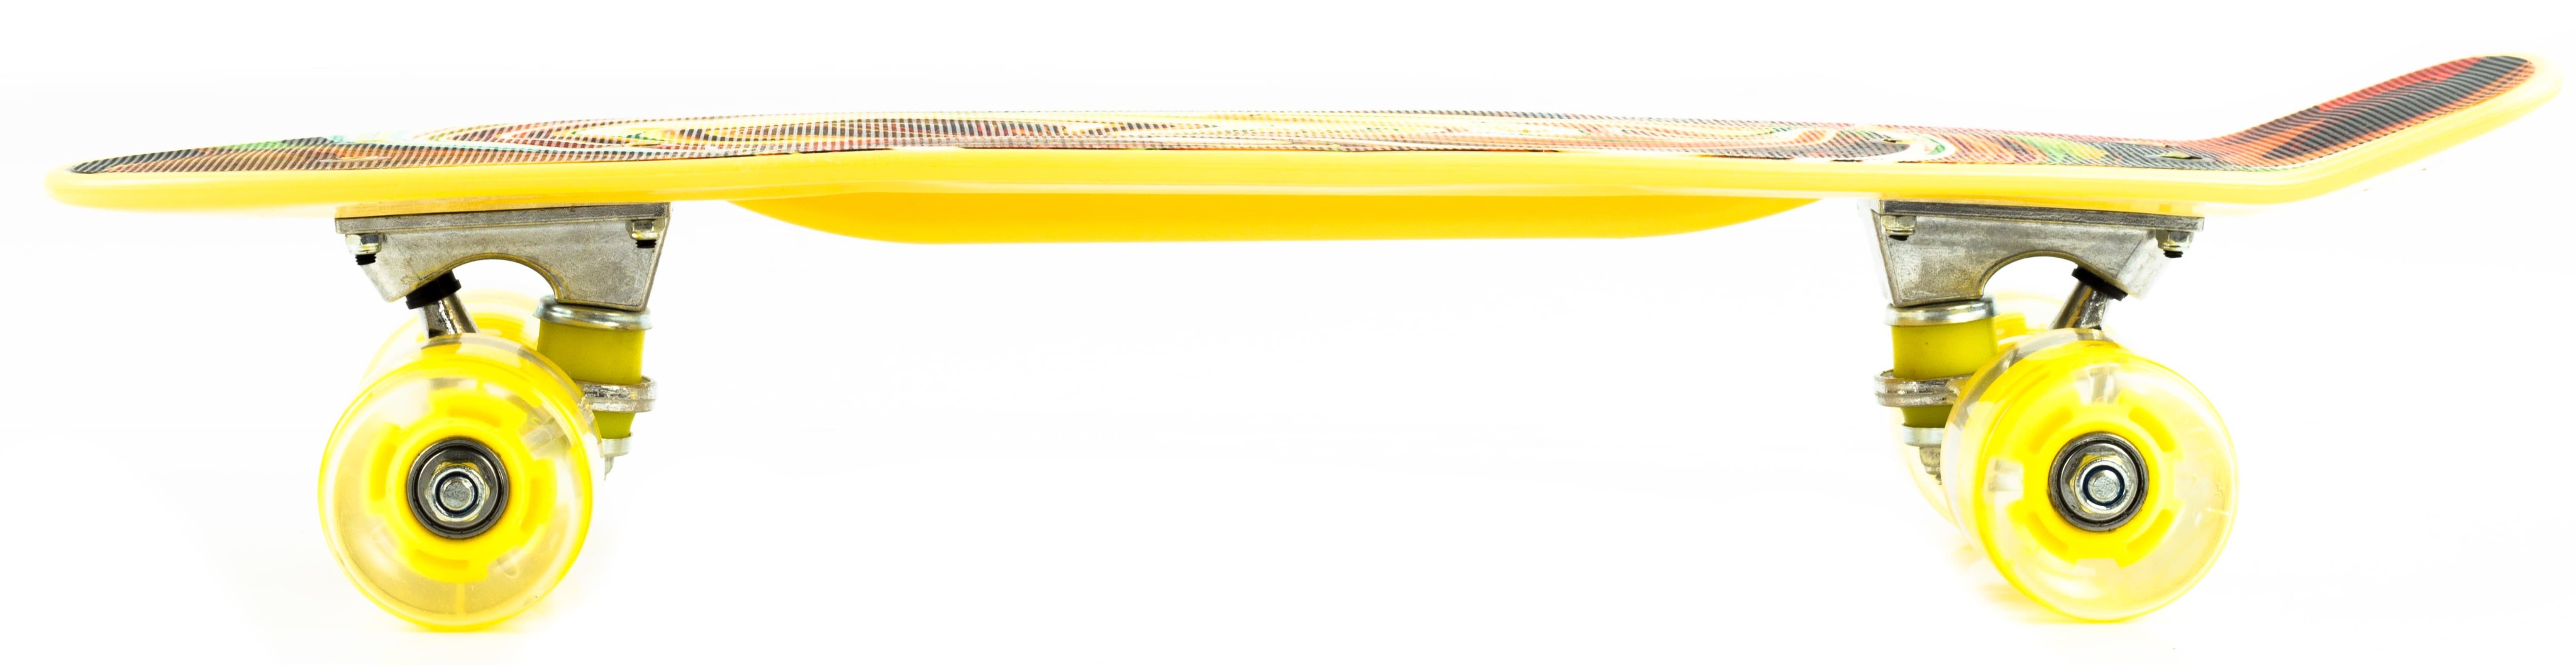 Пенни Борд со светящимися колесами, 57 см. T00408 / Микс